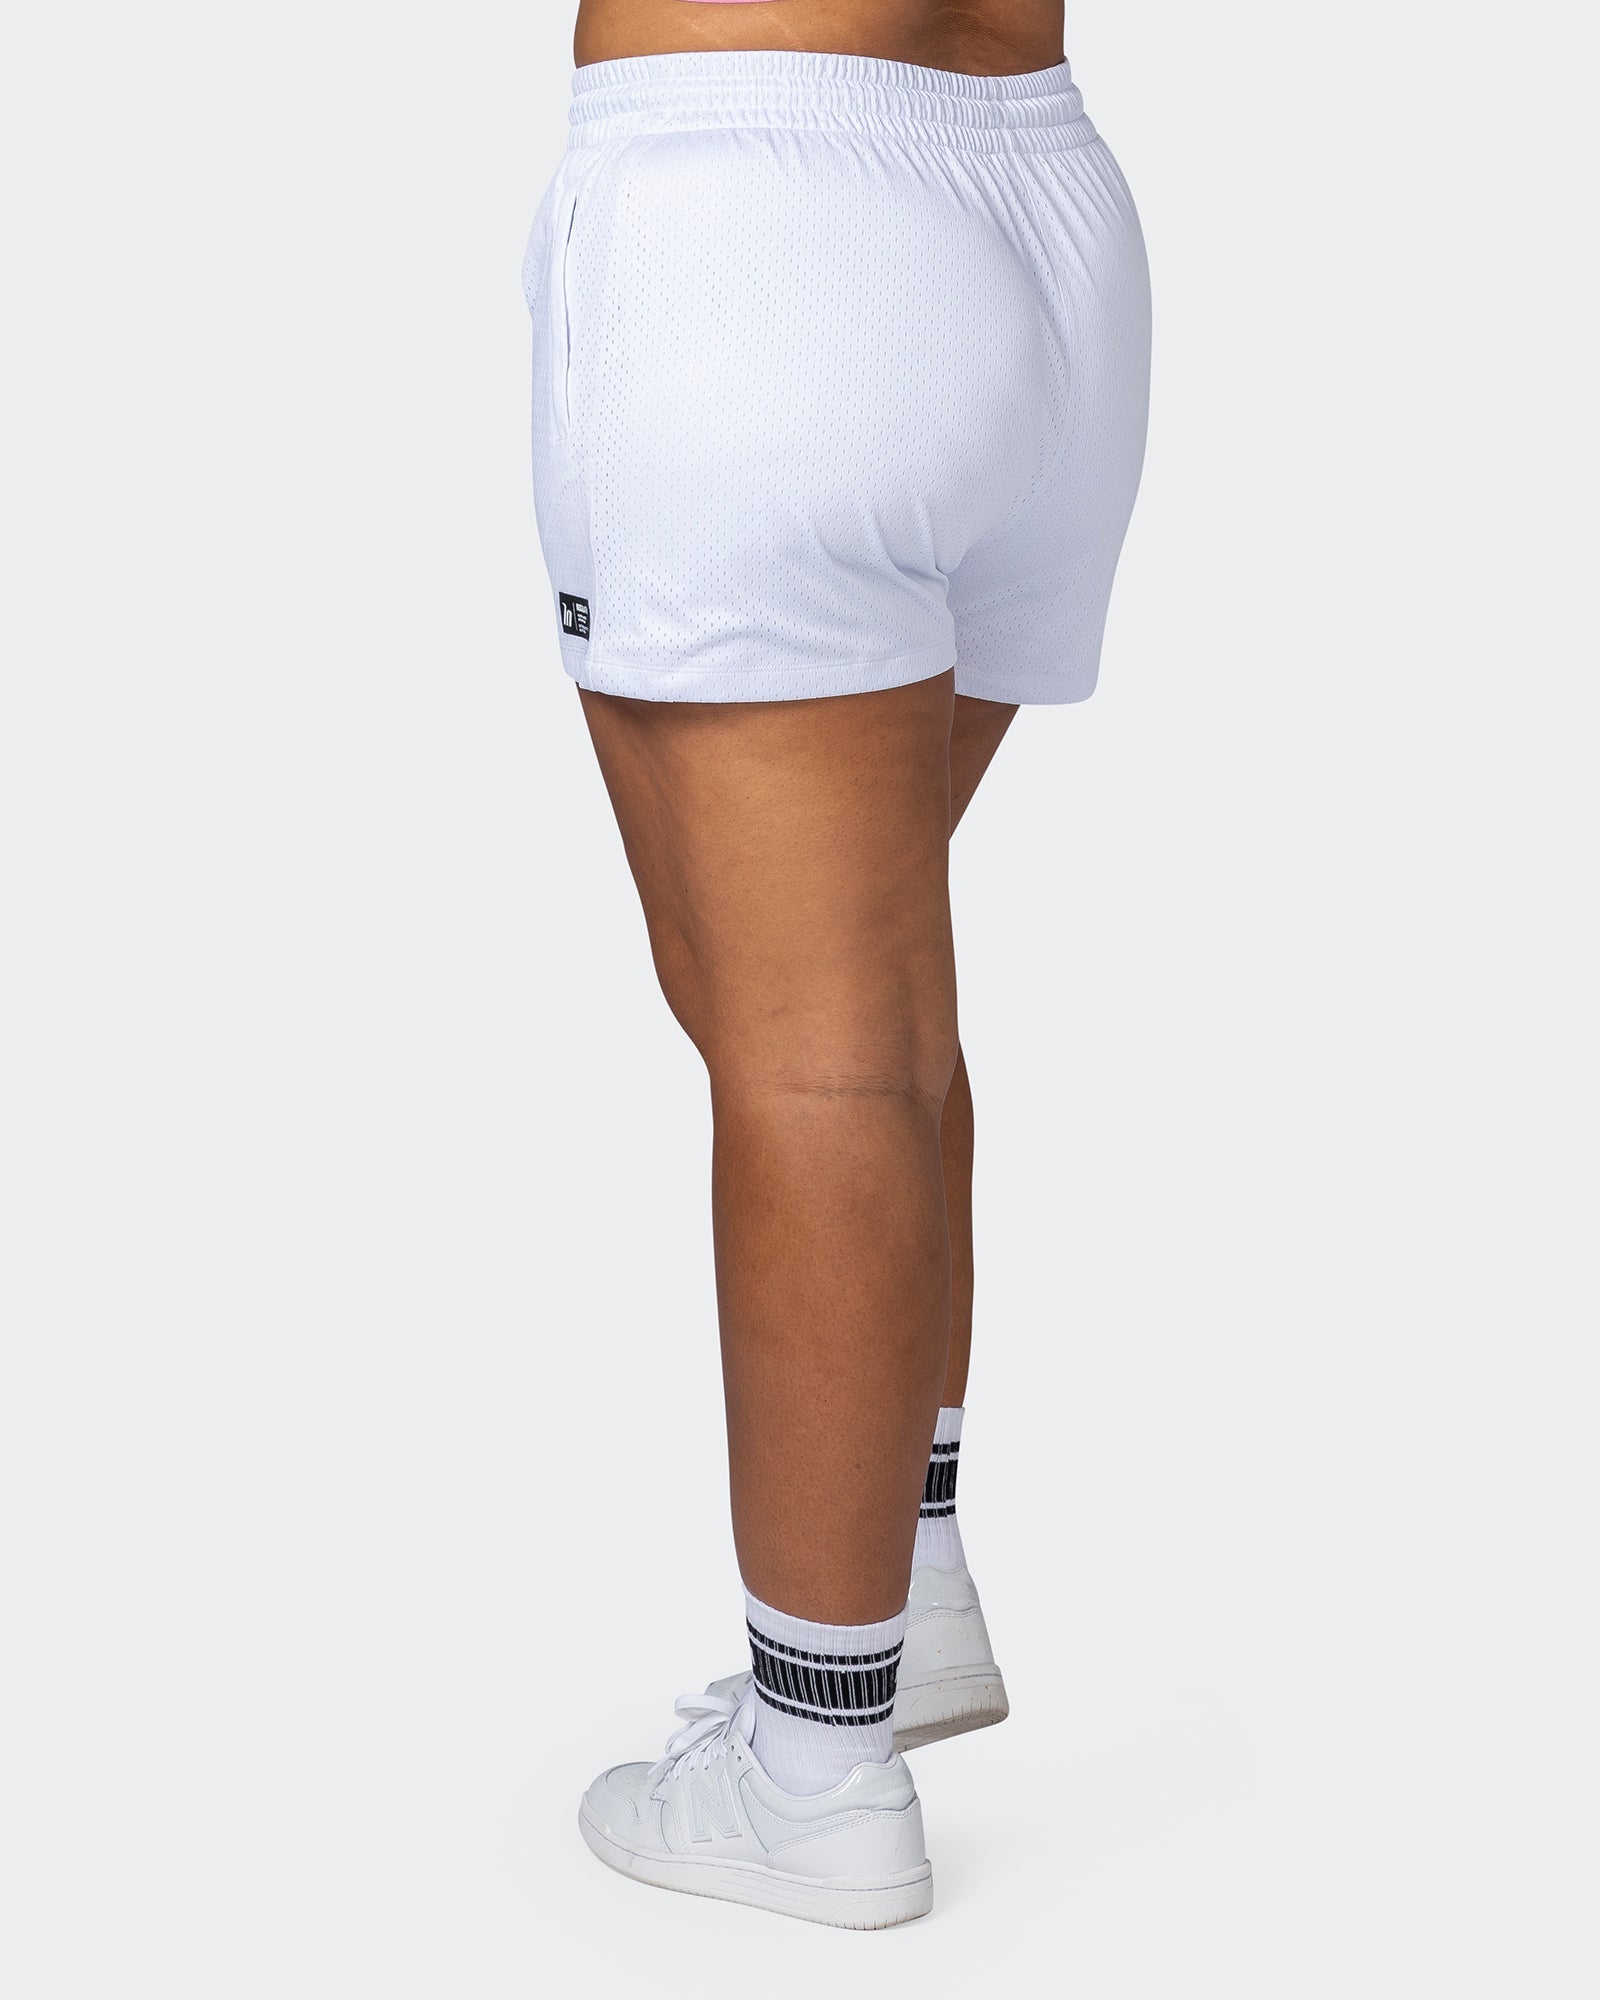 Limitless Mesh Shorts - White